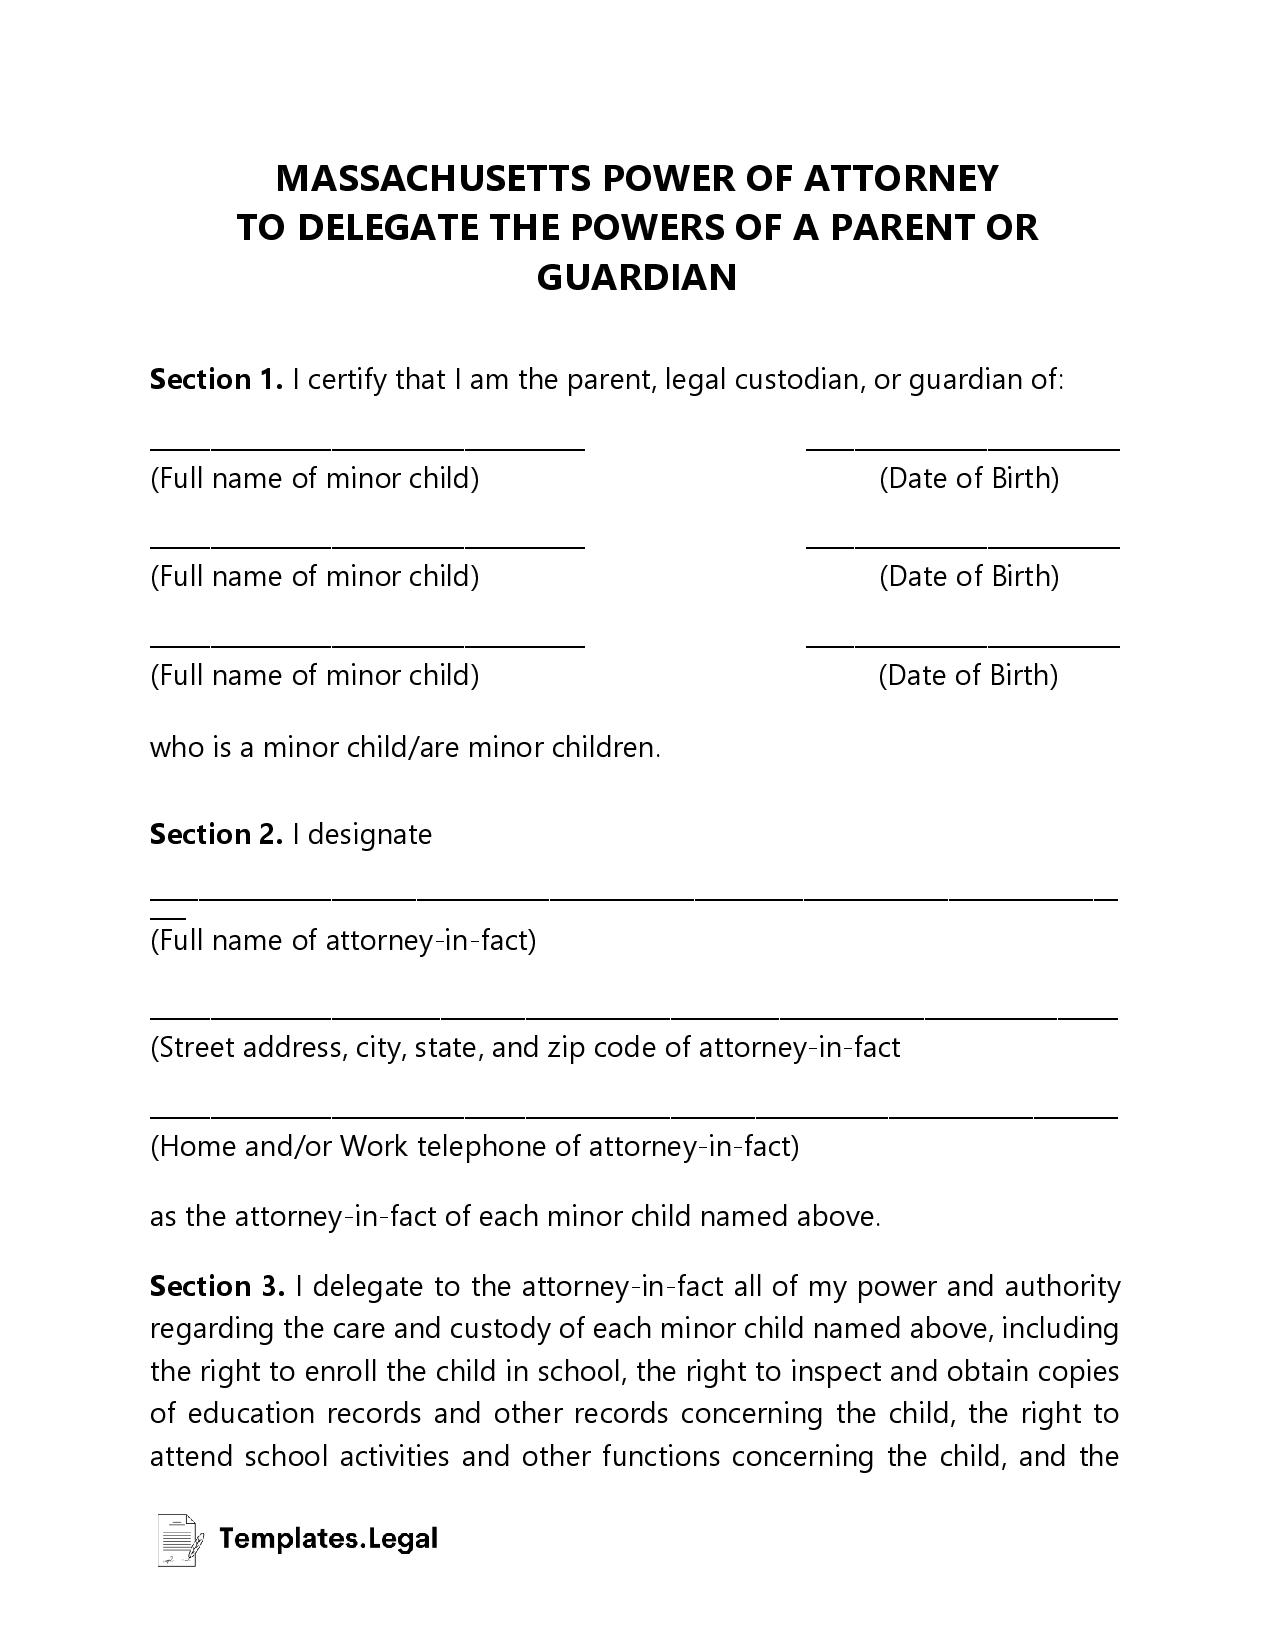 Massachusetts Minor (Child) Power of Attorney - Templates.Legal